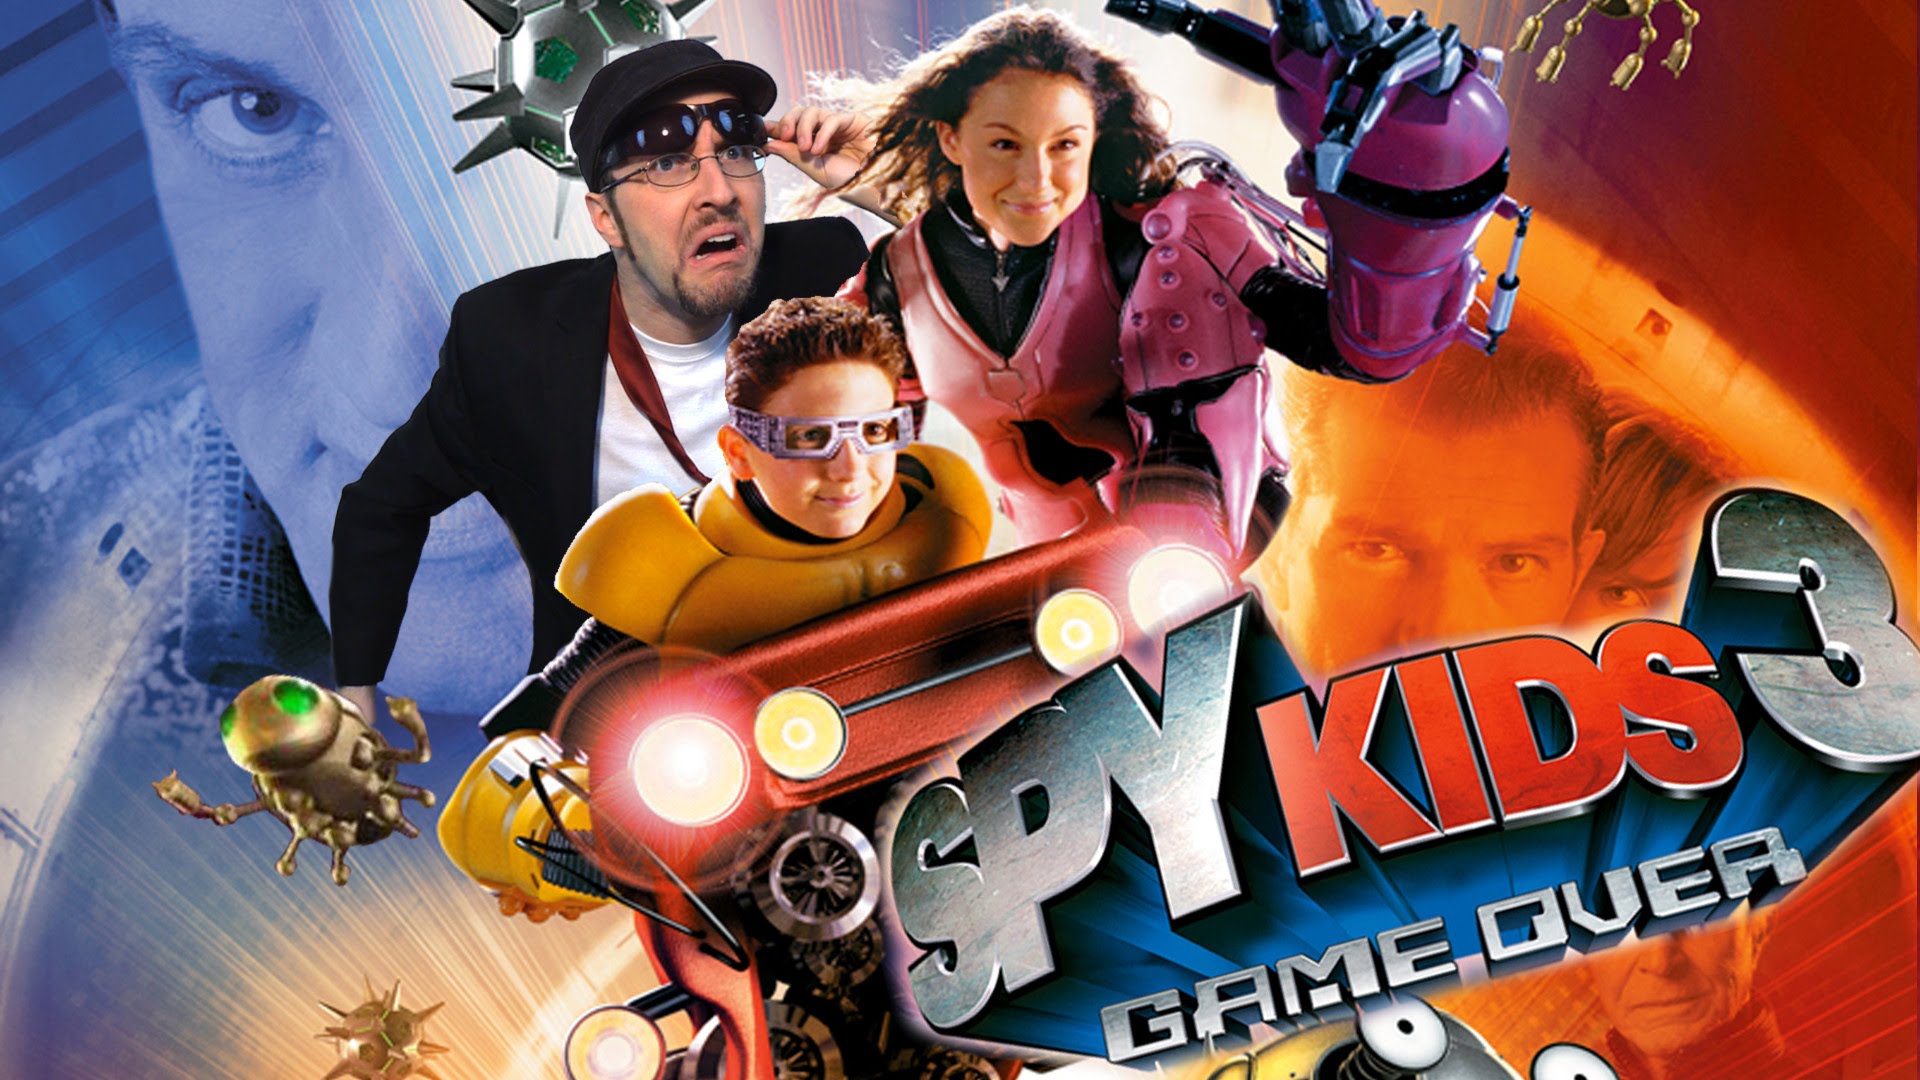 Spy Kids 3-D: Game Over #21